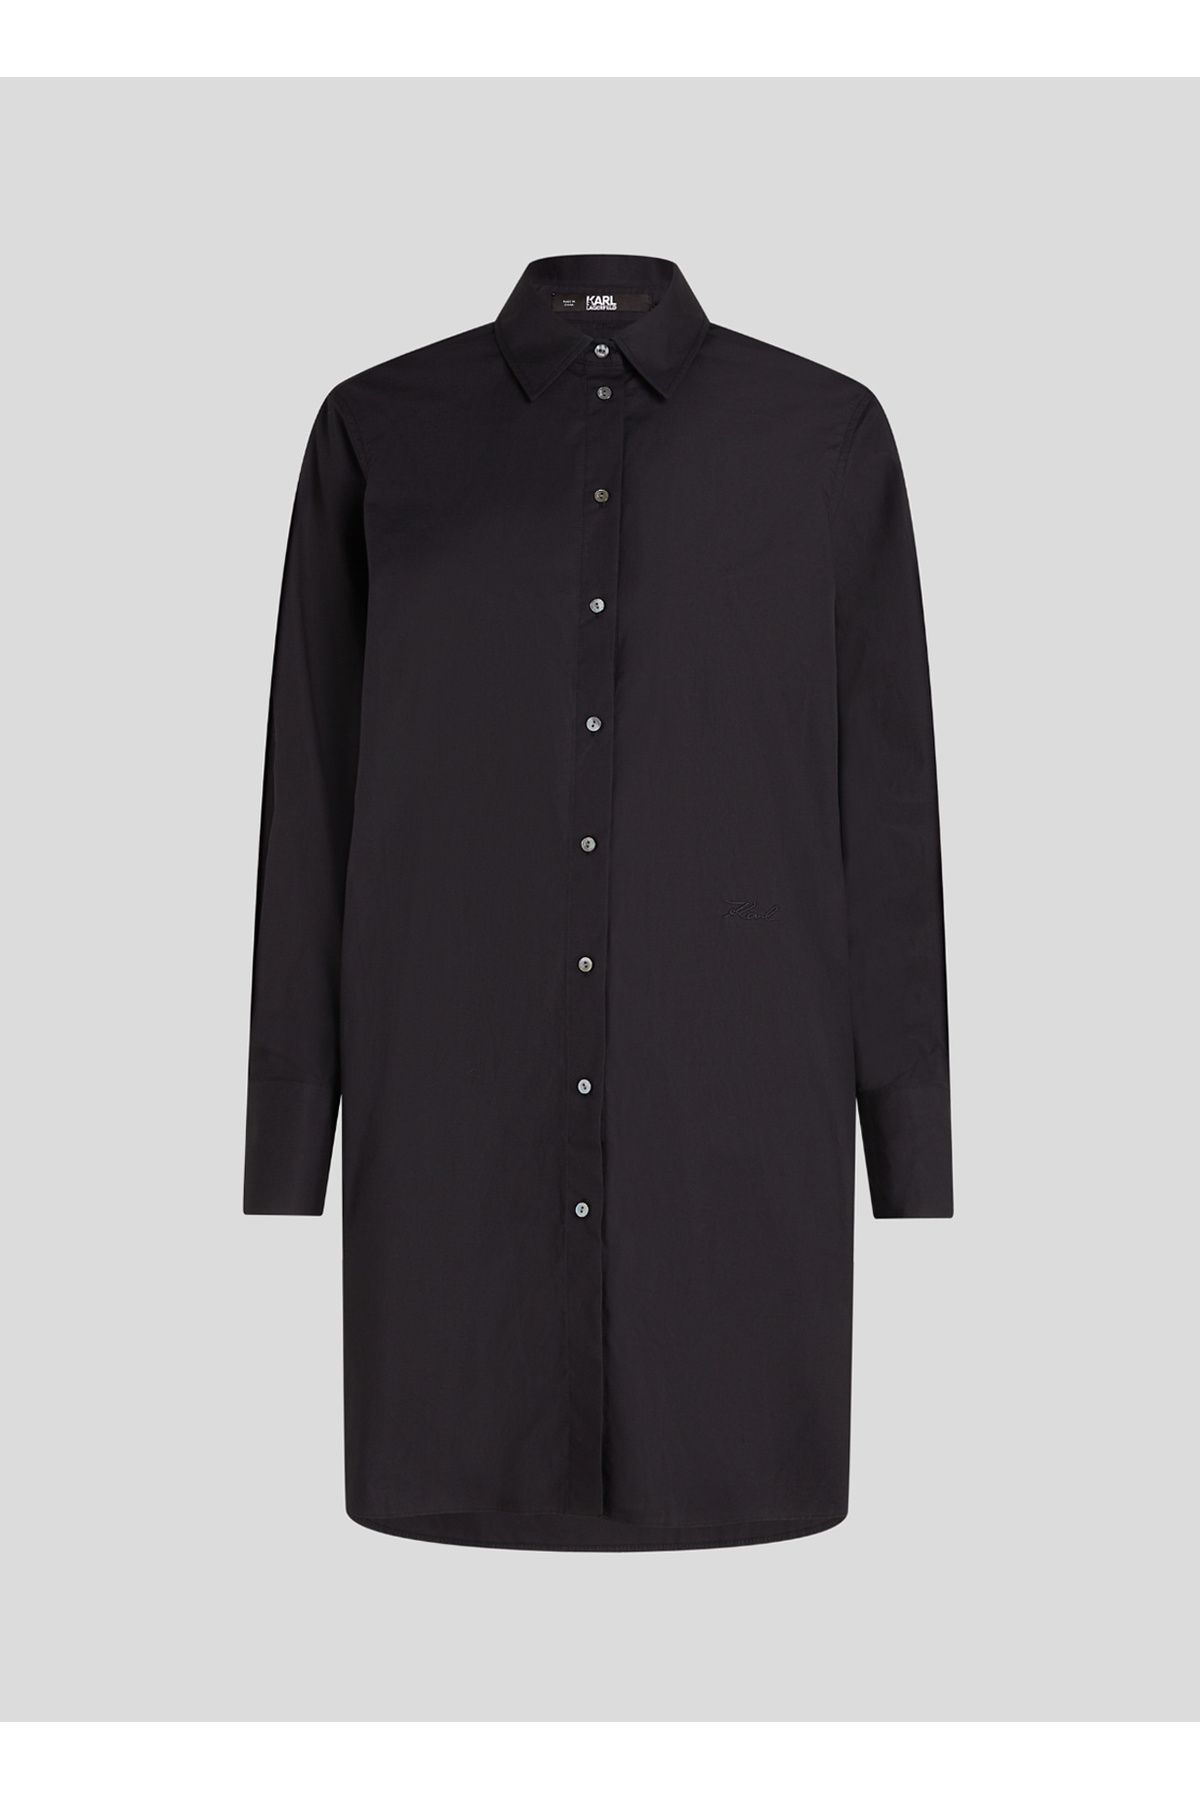 Karl Lagerfeld Gömlek Yaka Düz Siyah Kadın Bluz 235W1602